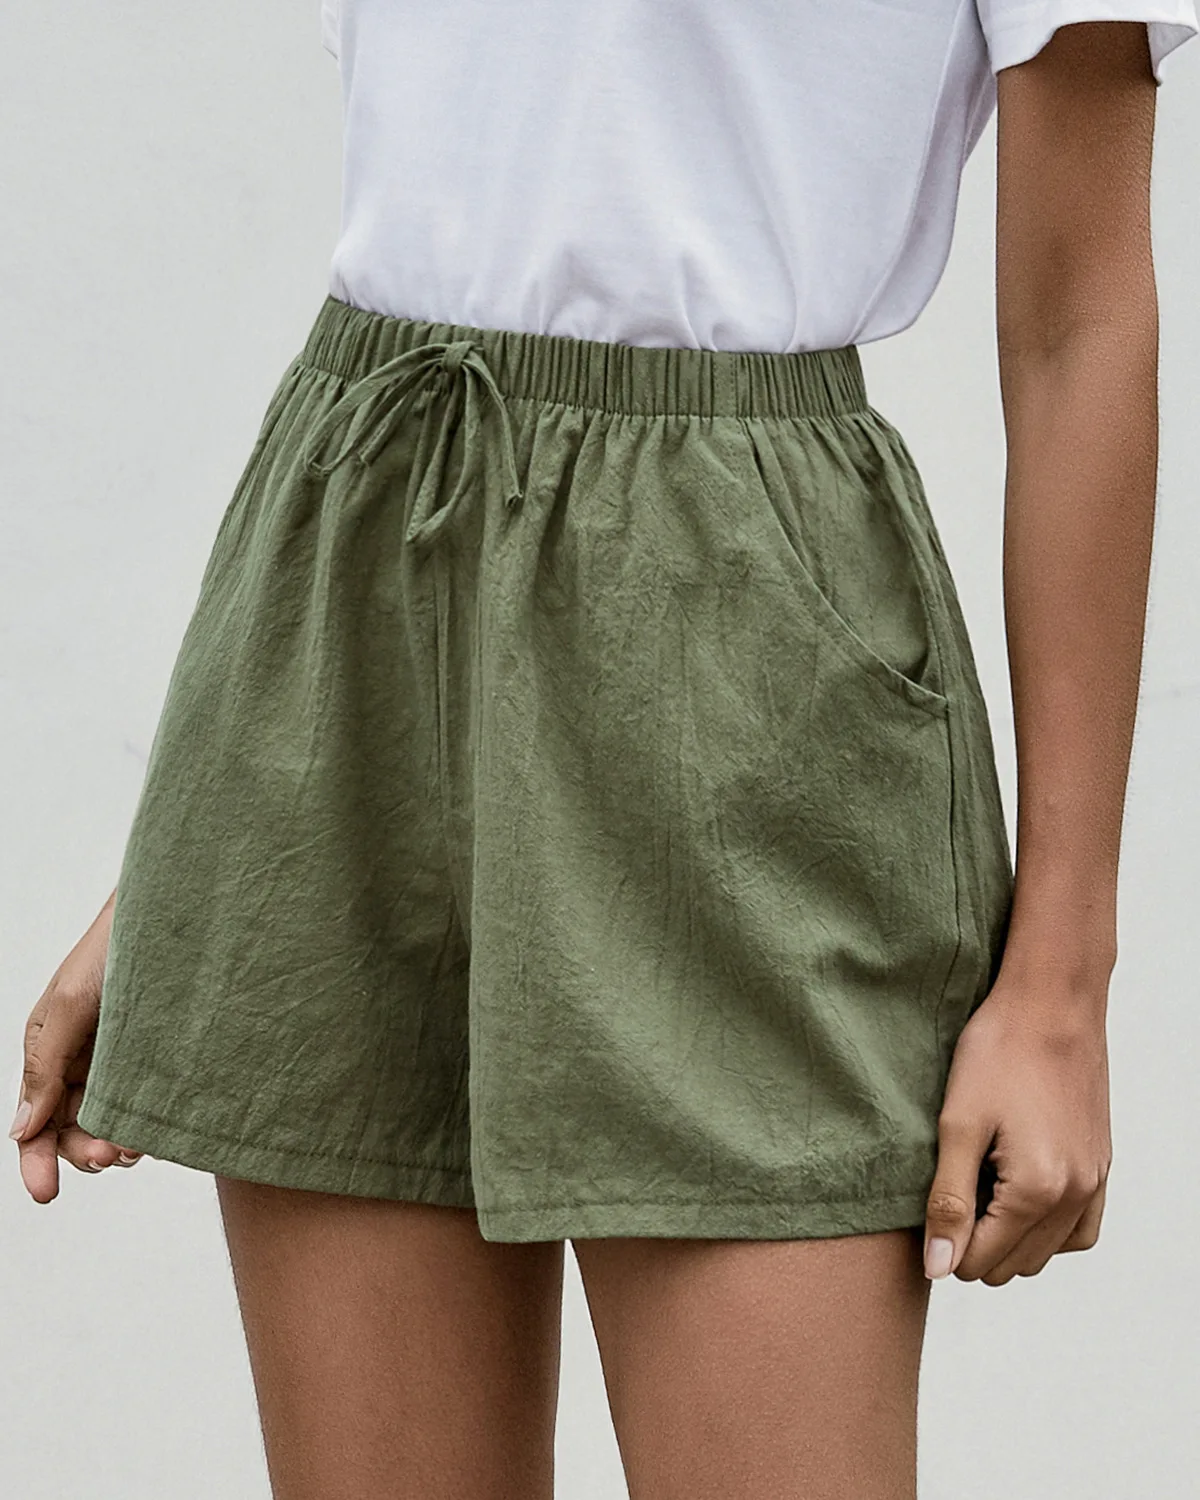 New Women's Shorts Hot Summer Casual Cotton Linen Shorts Plus Size Mid Waist Short Fashion Woman Streetwear Short Pants